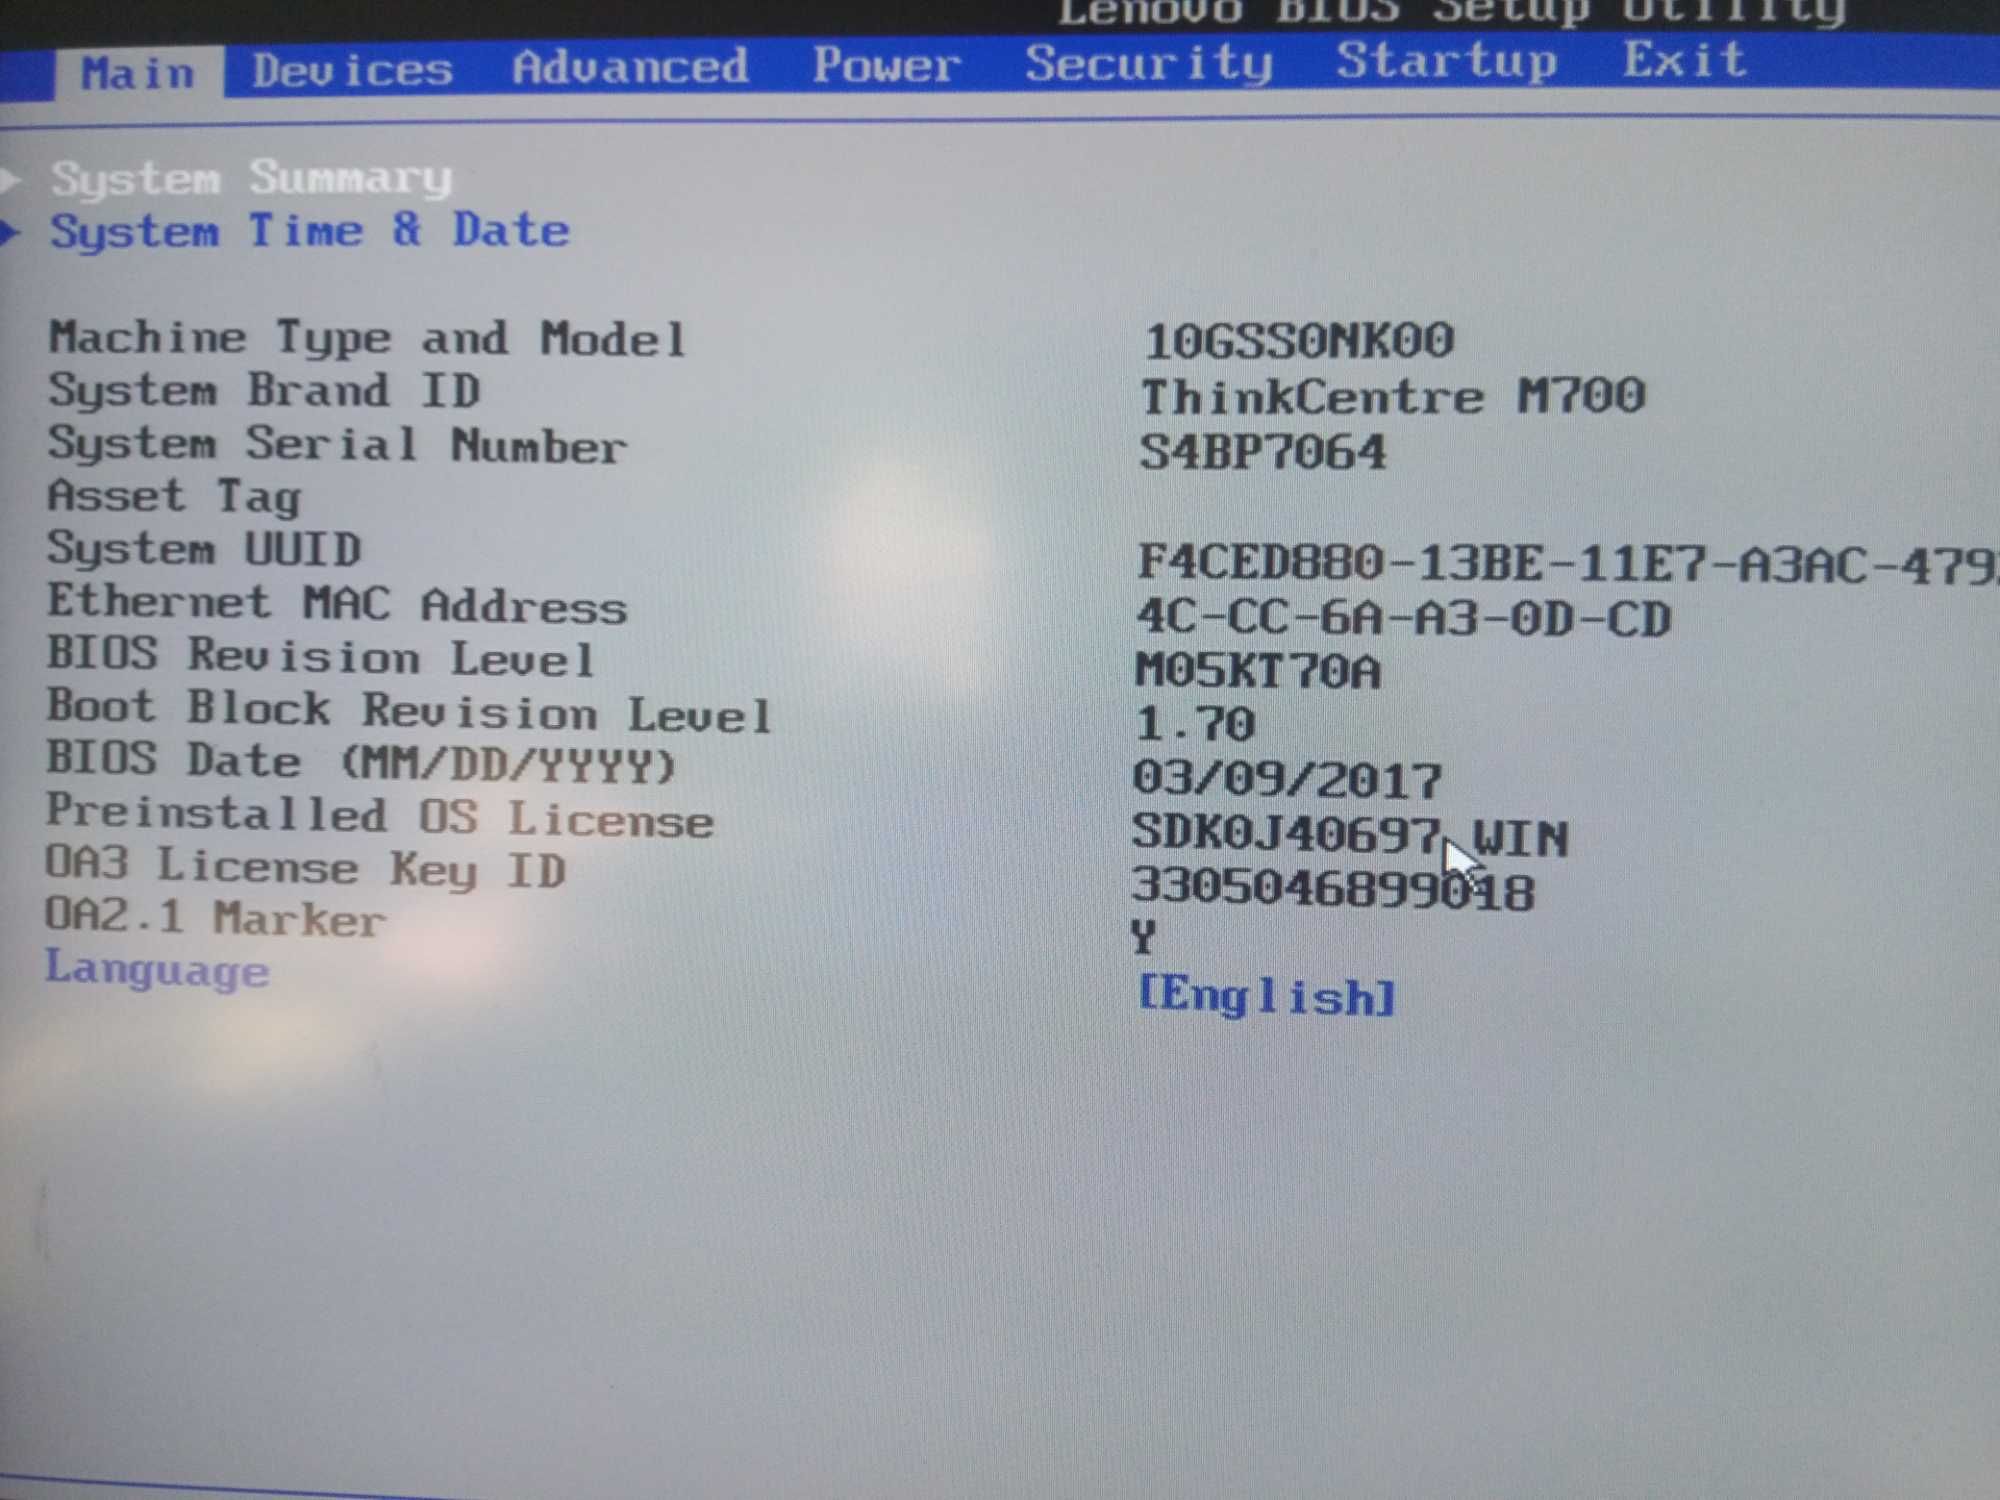 плата  IH110MS  для Lenovo M700